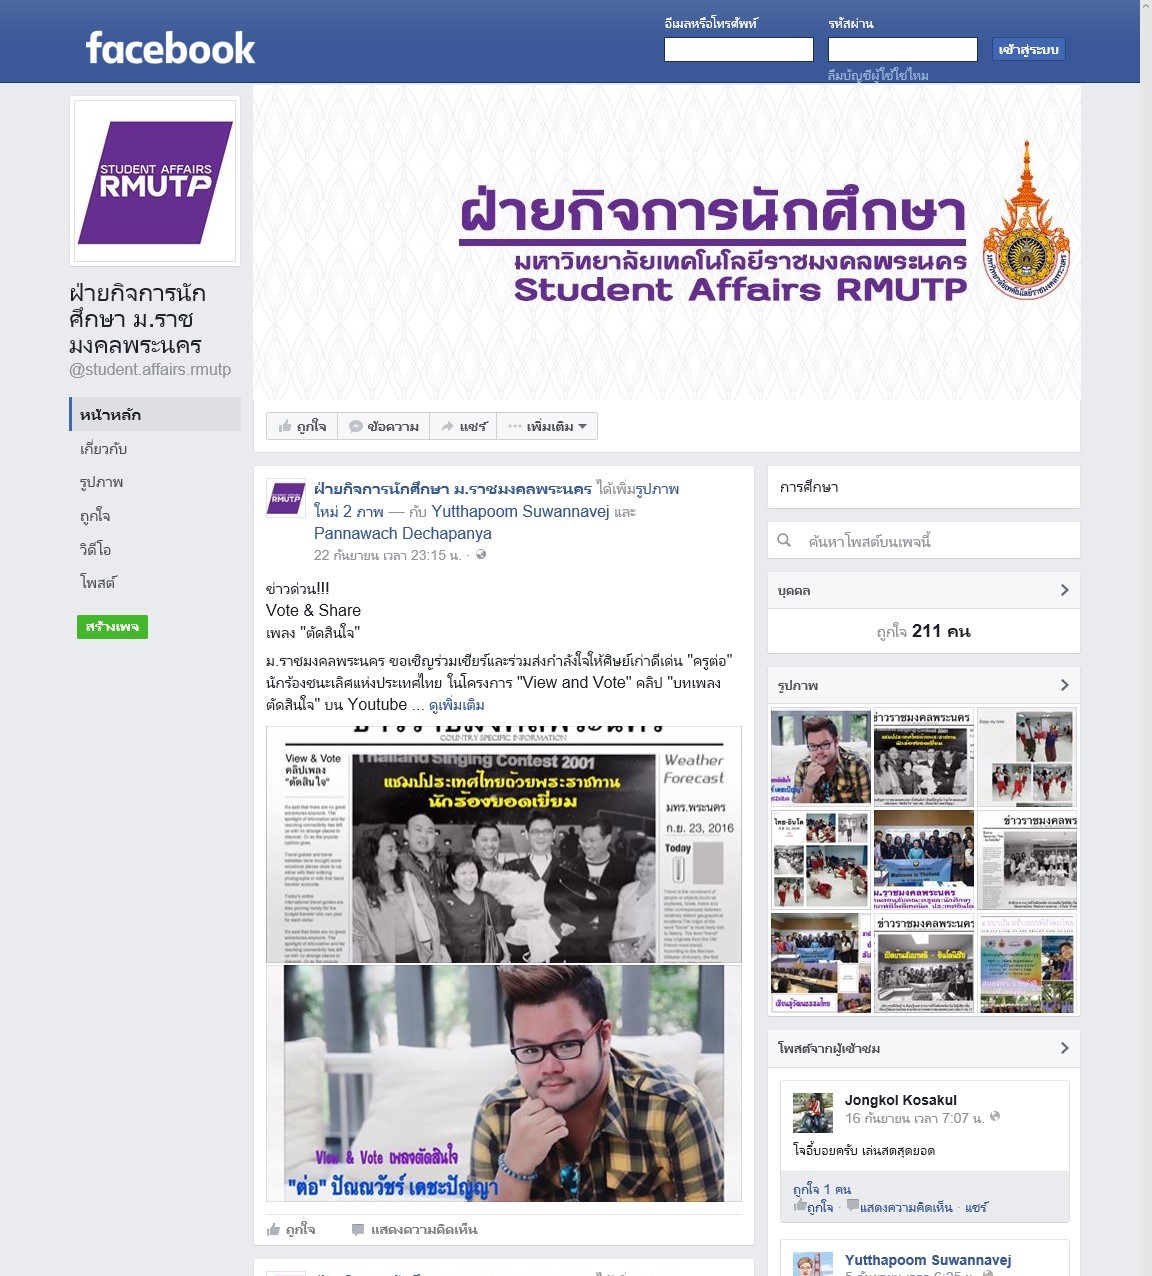 Fanpage ฝ่ายกิจการนักศึกษา ม.ราชมงคลพระนคร - https://www.facebook.com/student.affairs.rmutp/?hc_ref=PAGES_TIMELINE